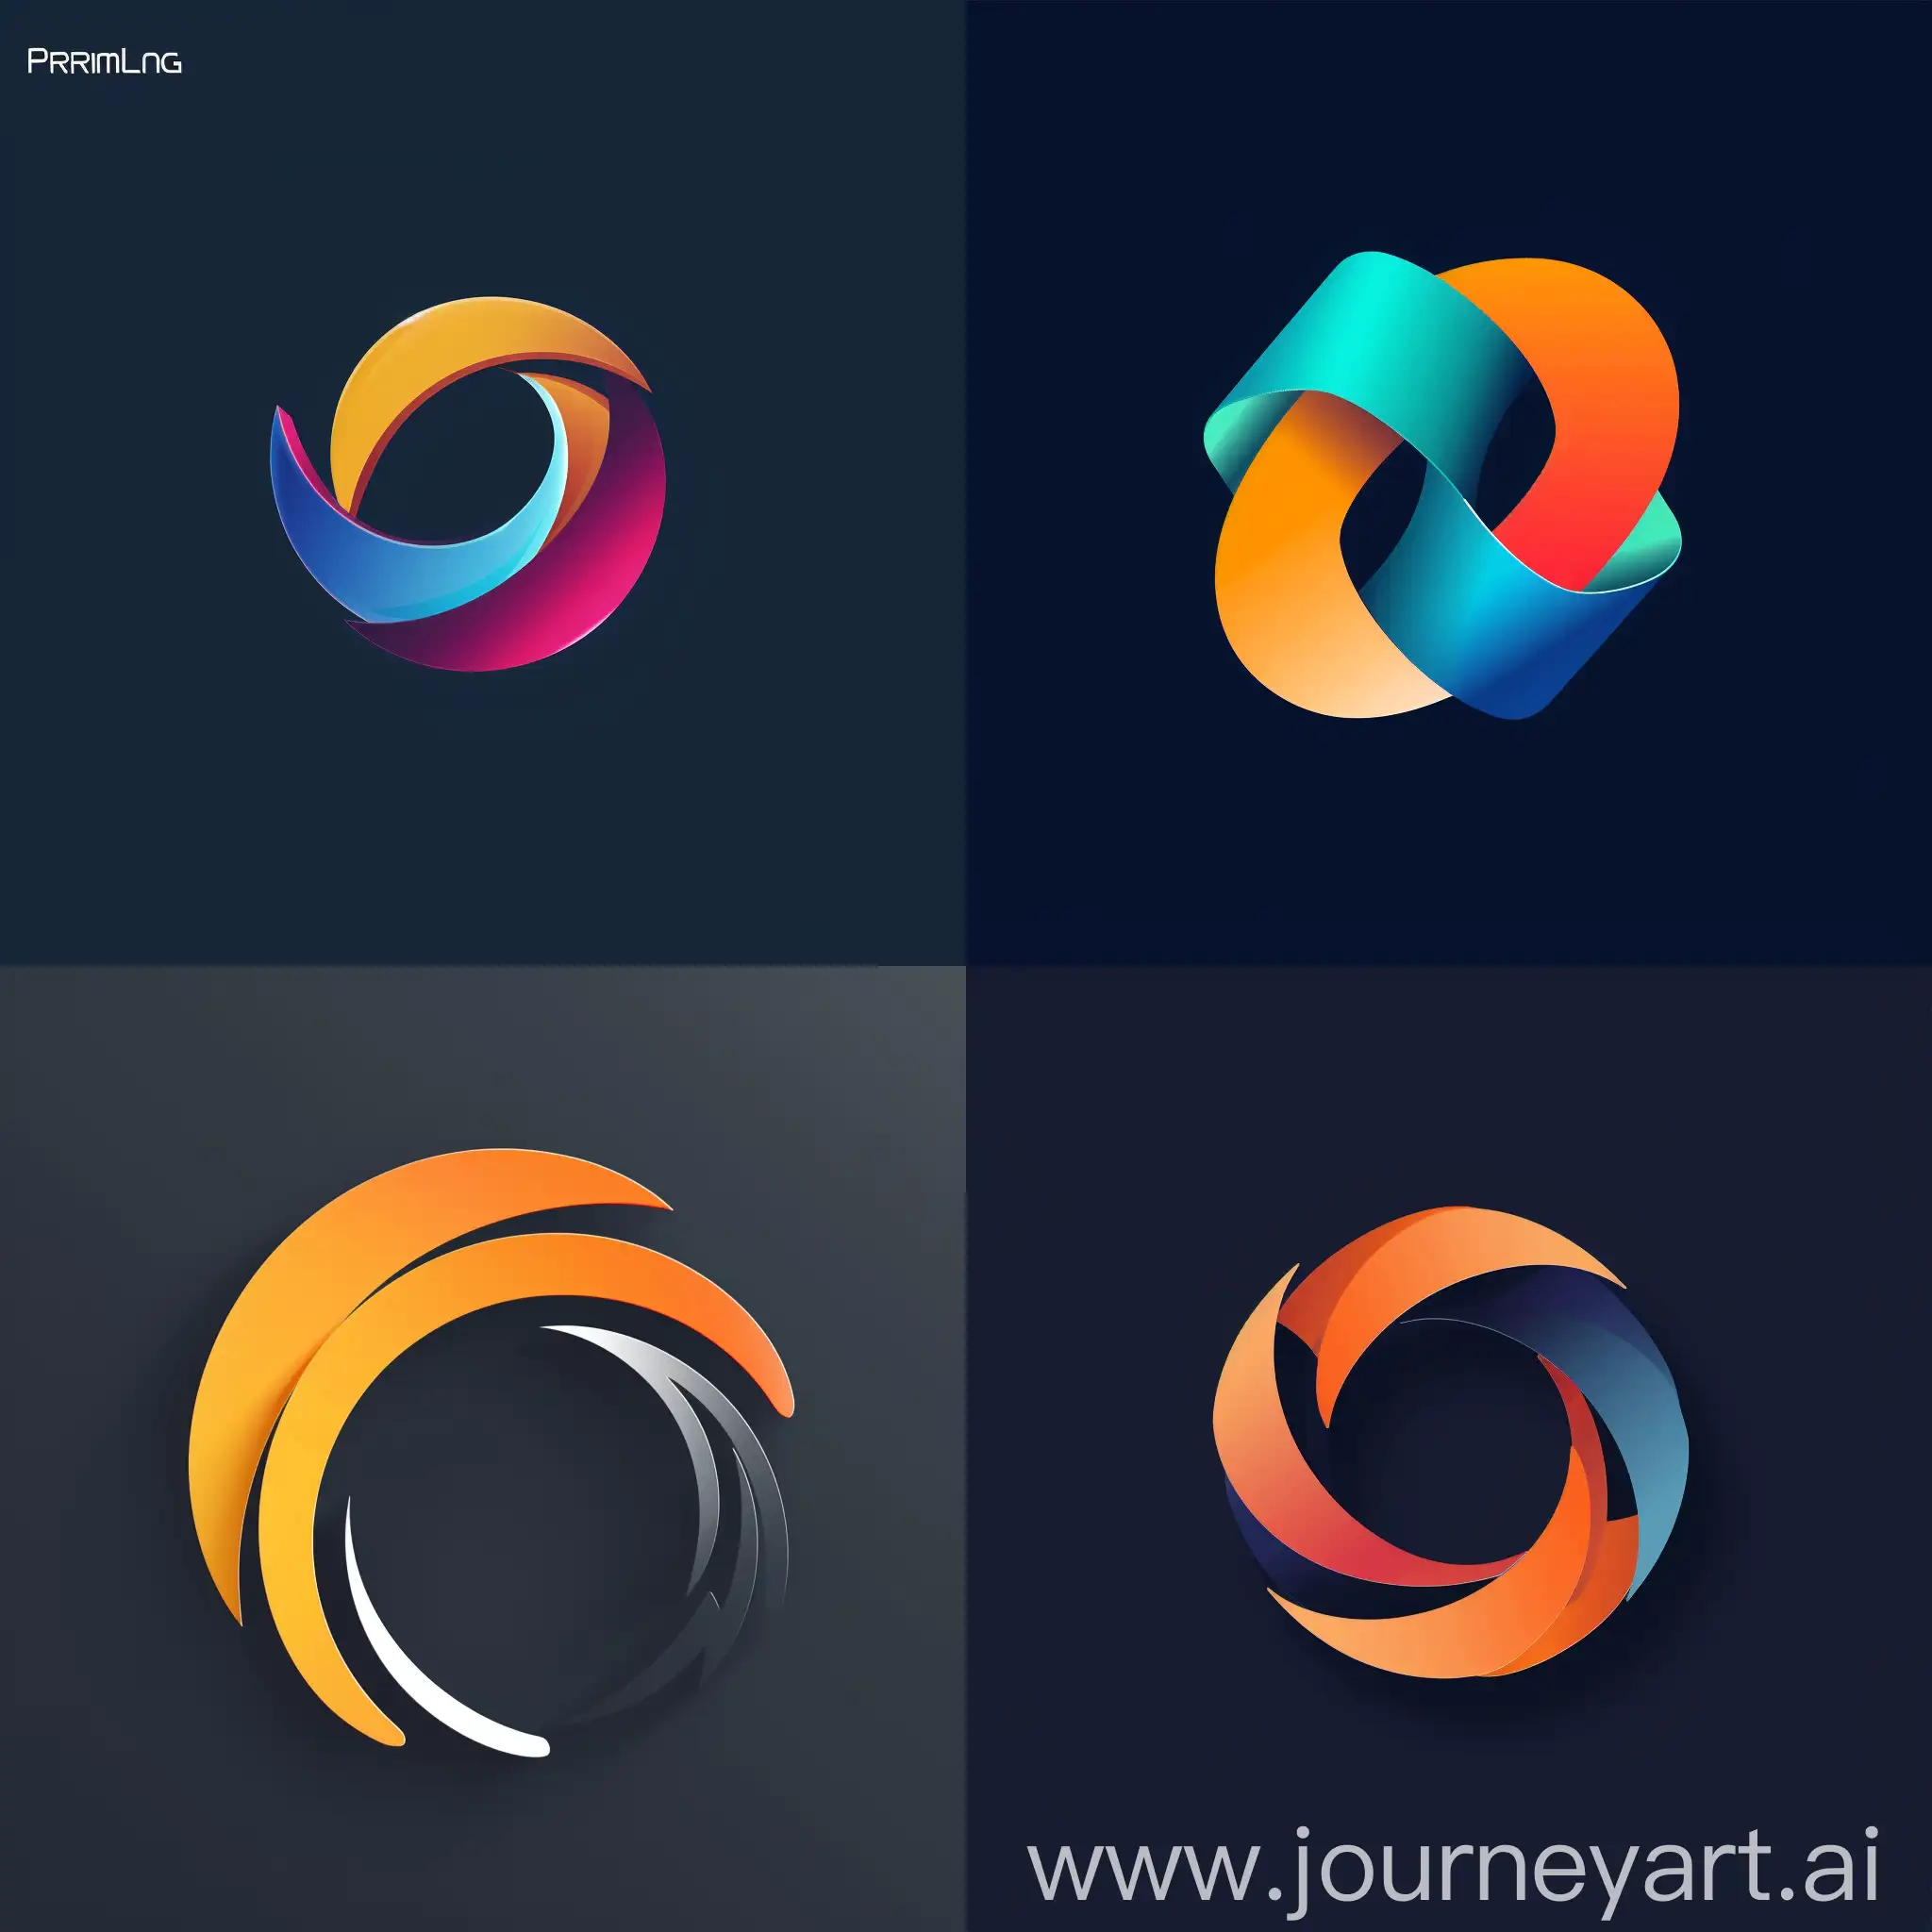 create minimalistic logo for primelink crm company